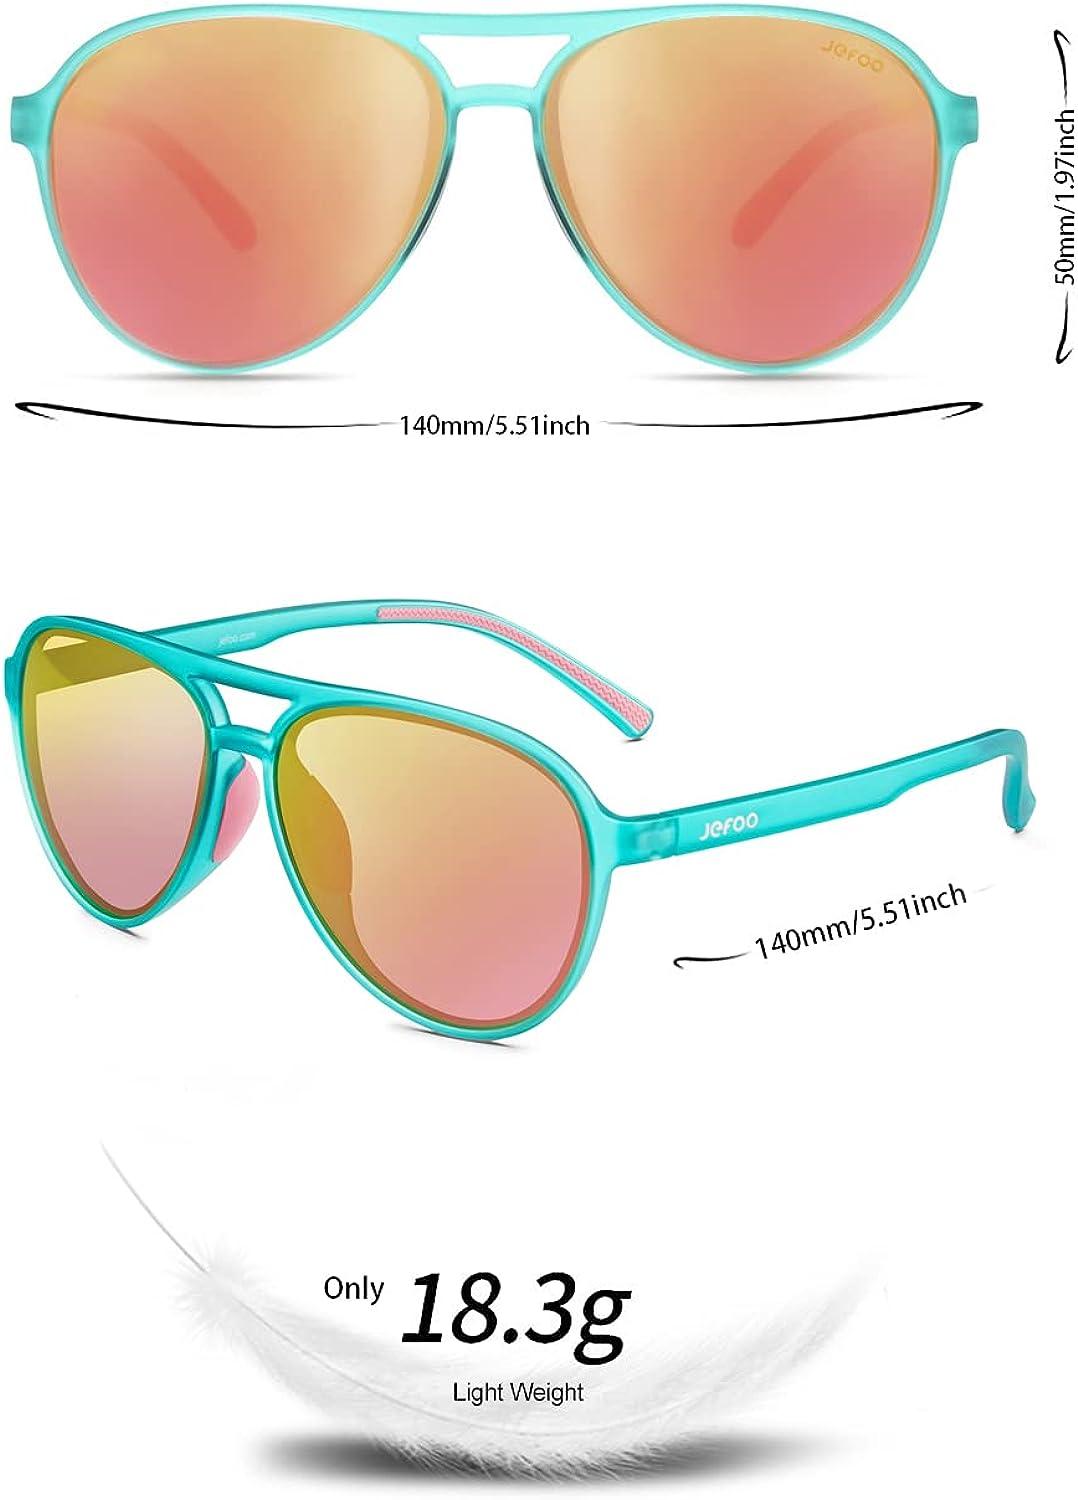 Fashion Sunglasses, Men Women Lightweight Frame Outdoor Protect